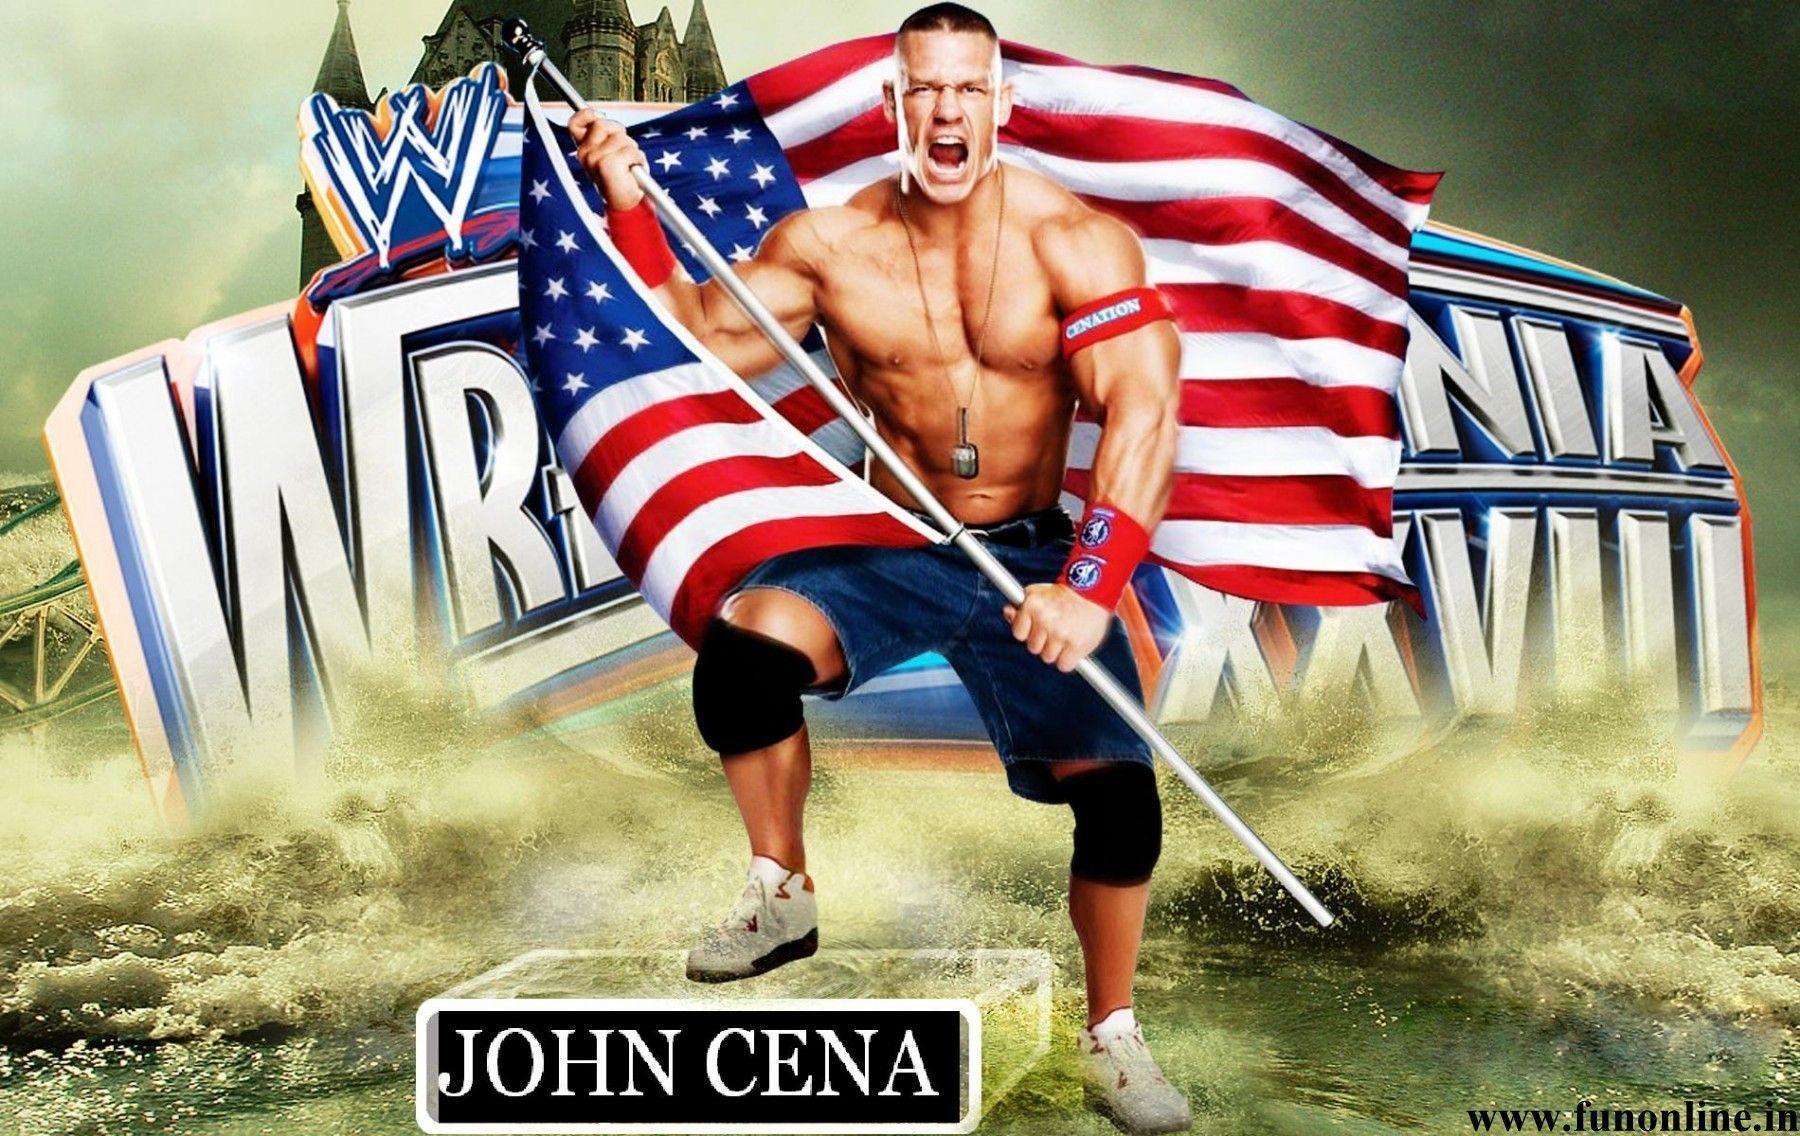 John Cena Flag Usa Wallpaper, Size: 1800x1136. AmazingPict.com